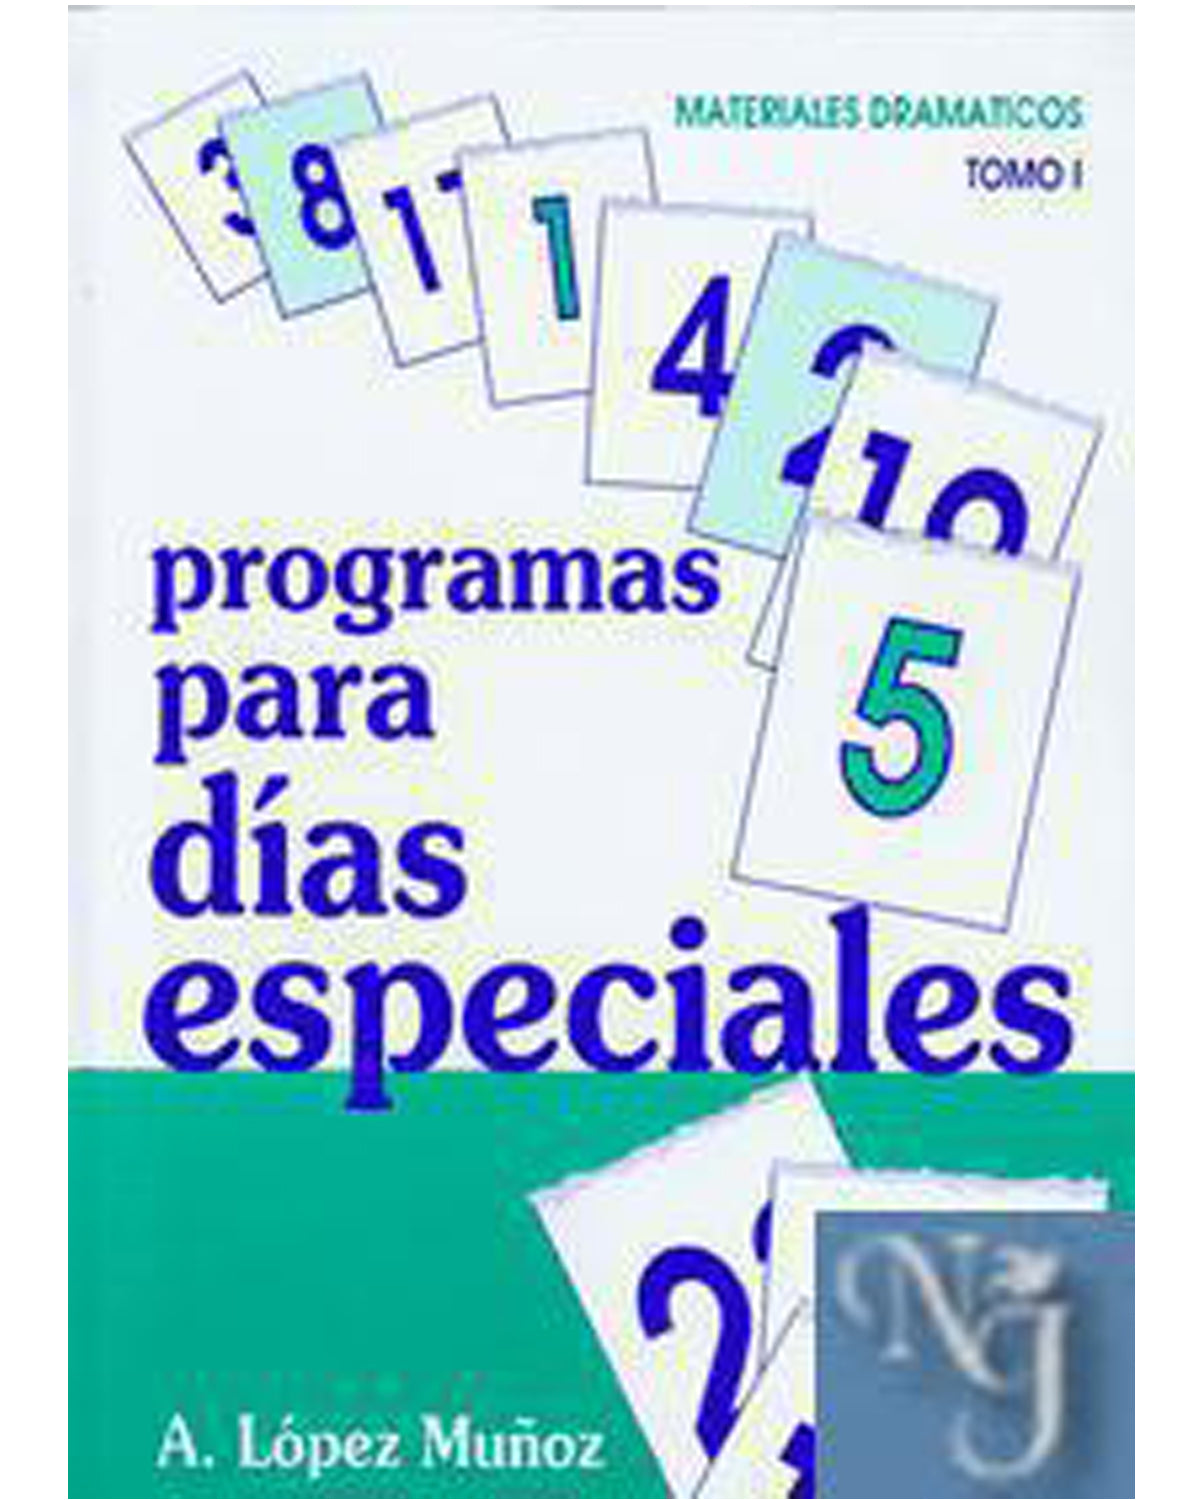 Programa Para Dias Especiales-A. Lopez Munoz Tomo I